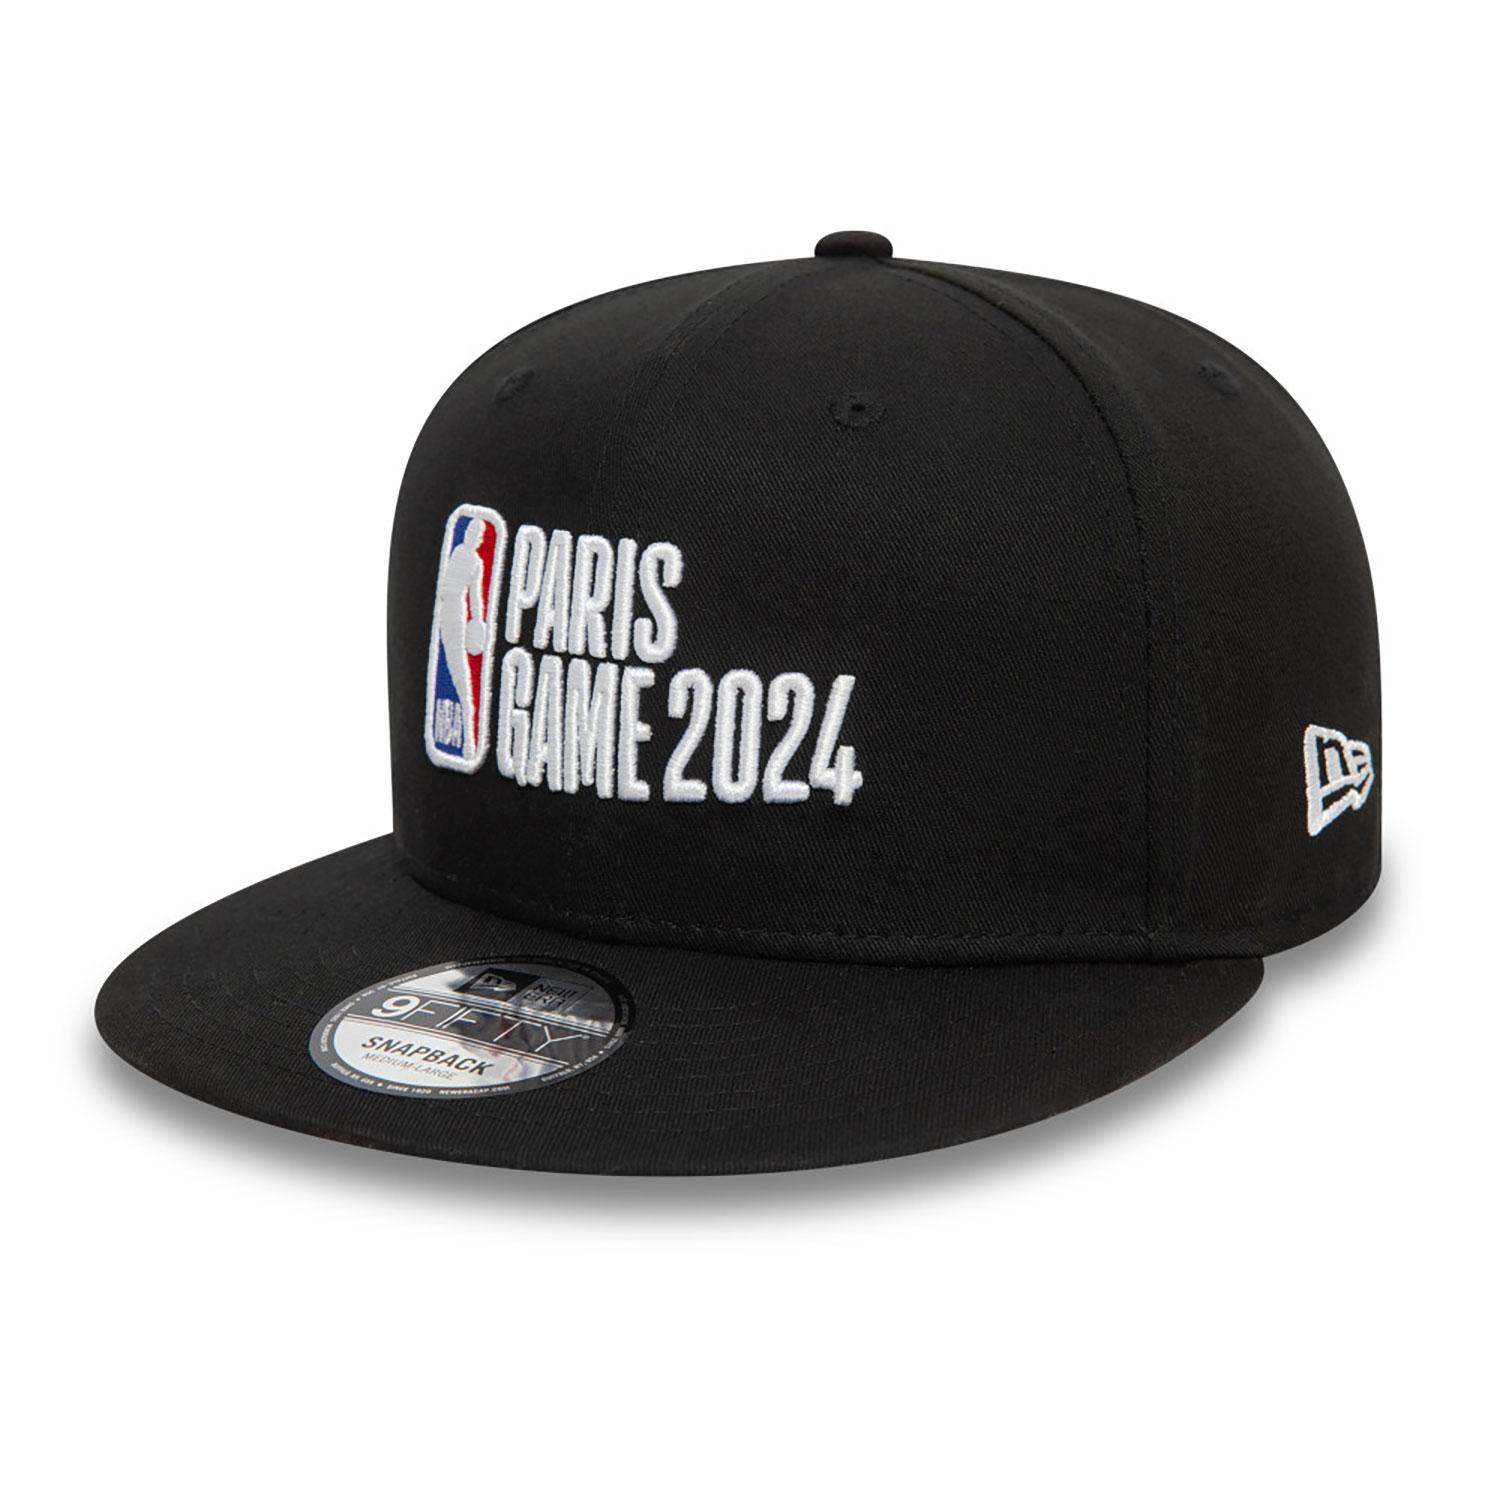 NBA Logo Paris 2024 Black 9FIFTY Snapback Cap